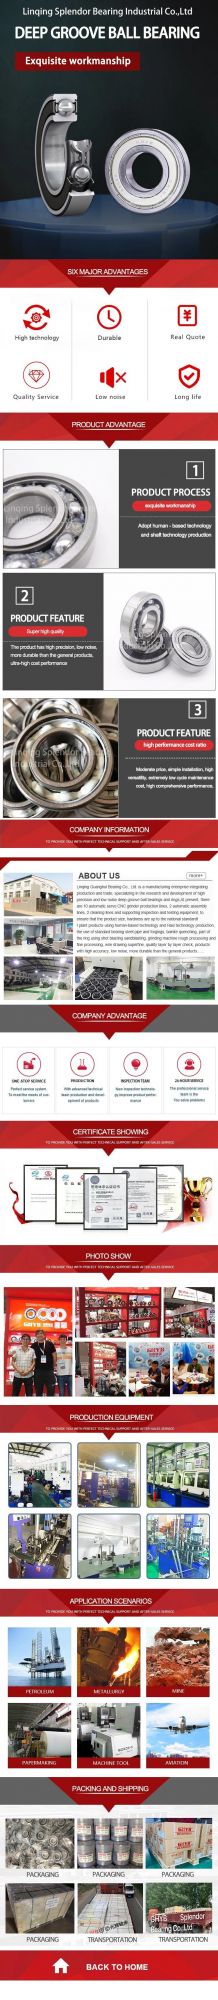 China Factory Distributor Supplier of Deep Groove Ball Bearings for Motors, Compressors, Alternators 6309-2rz/P6/Z2V2